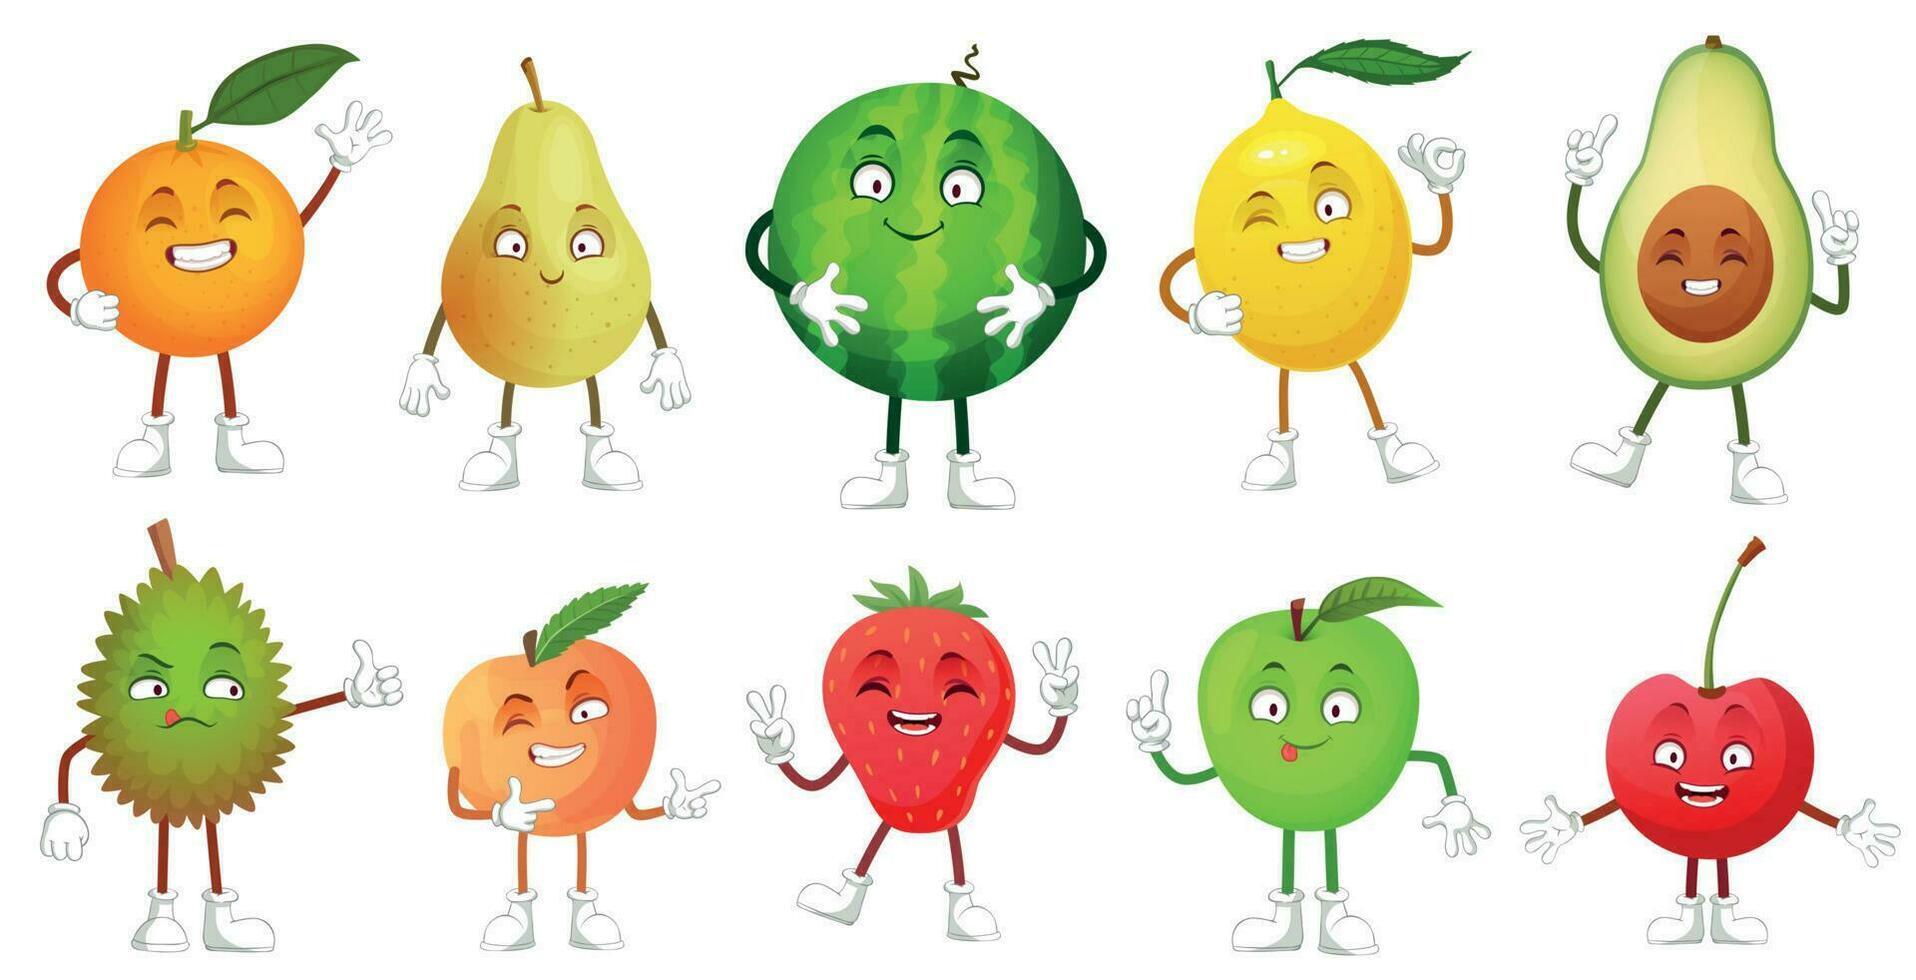 tekenfilm fruit karakter. gelukkig fruit mascotte grappig doerian, glimlachen appel en Peer. gezond vers voedsel vector illustratie reeks